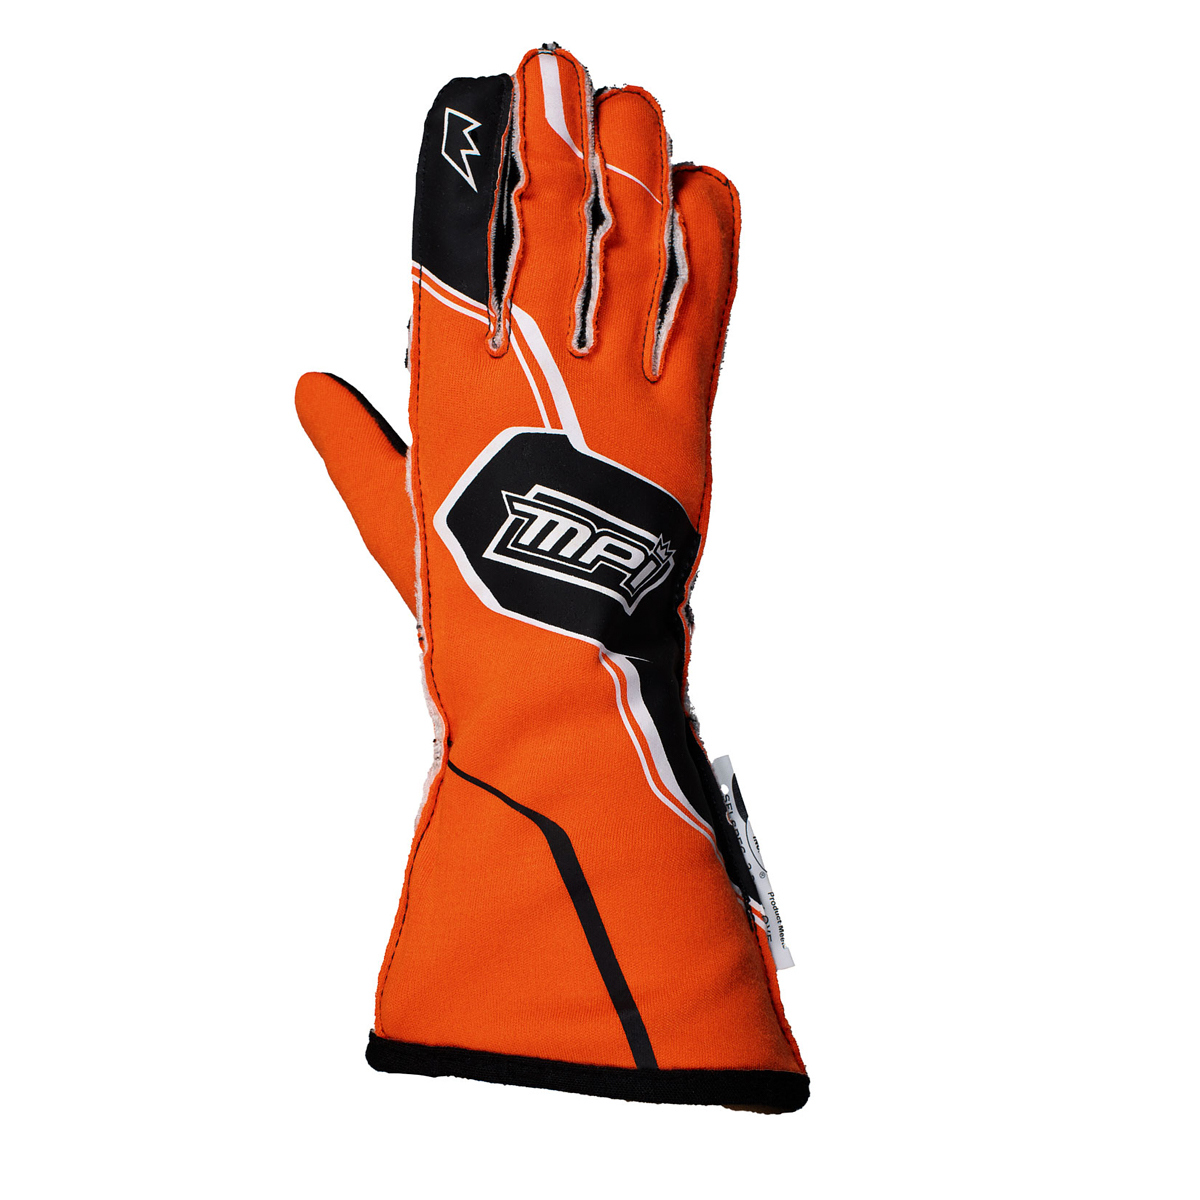 MPI USA MPI-GL-O-XL Driving Gloves, SFI 3.3/5, Double Layer, Nomex, Padded Palm, Orange / Black, X-Large, Pair